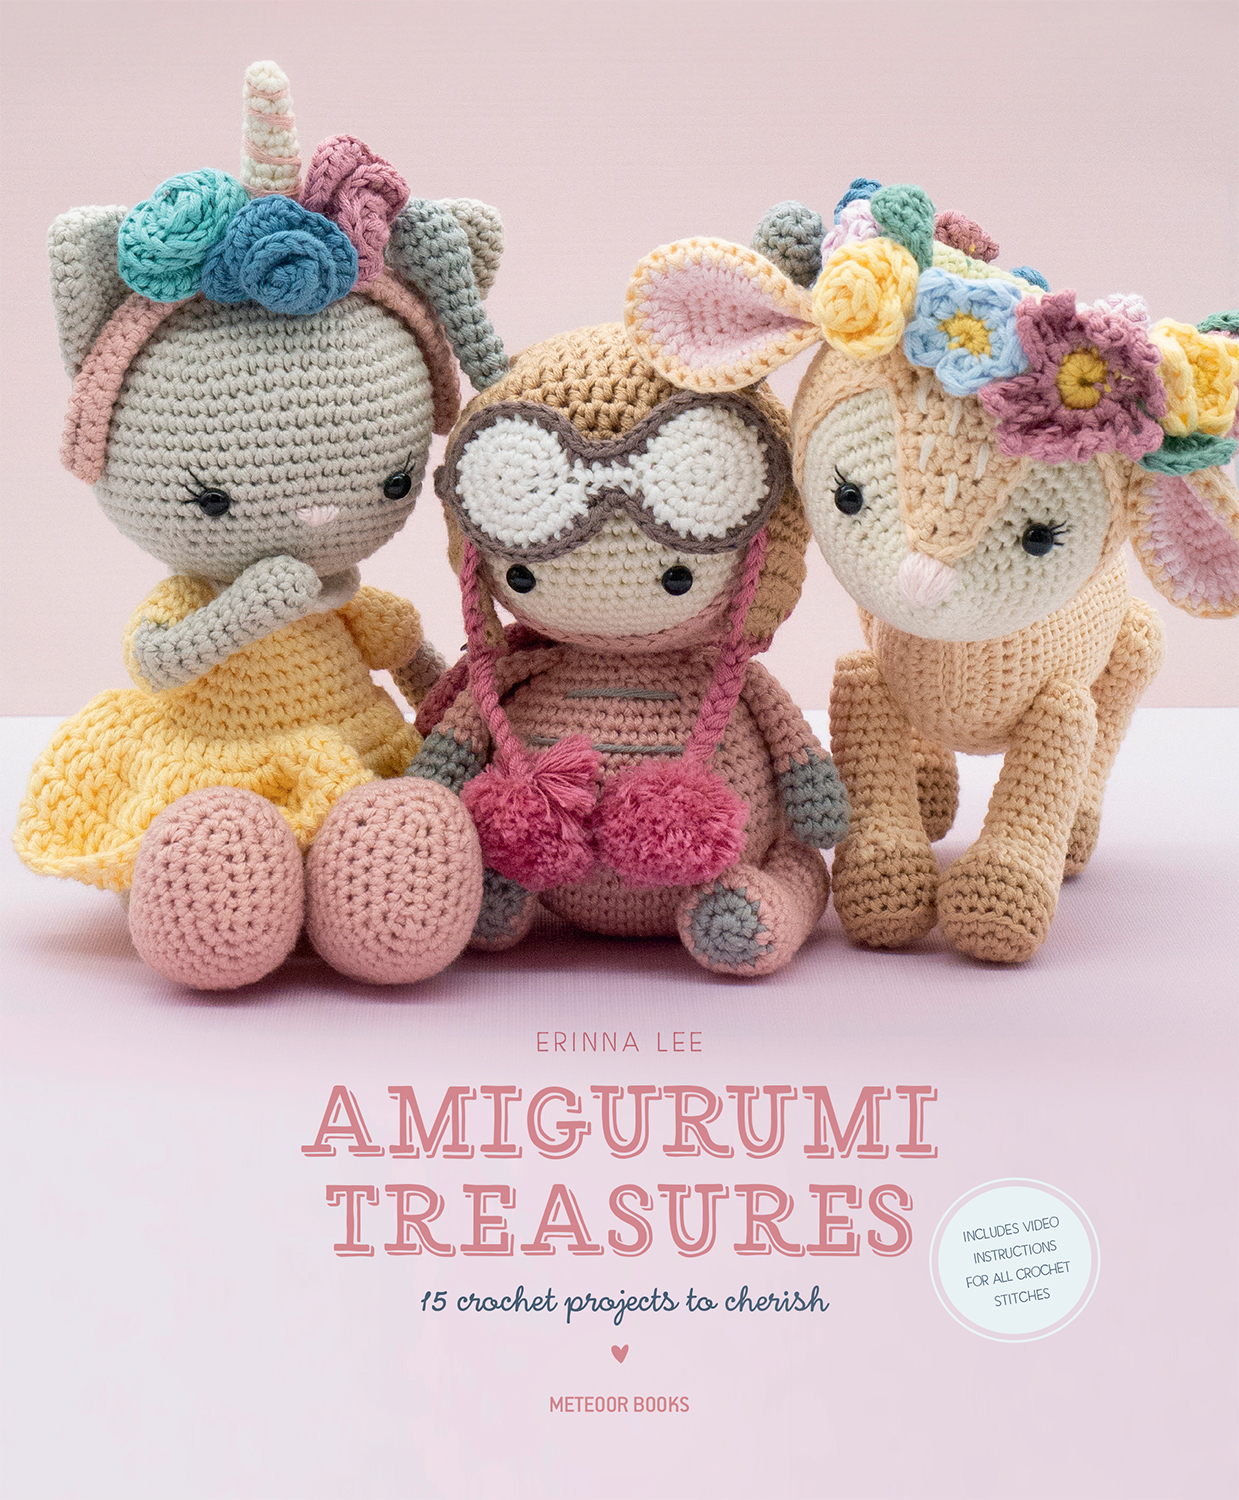 Knit & Crochet Stuffed Animal Amigurumi Kits – Darn Good Yarn